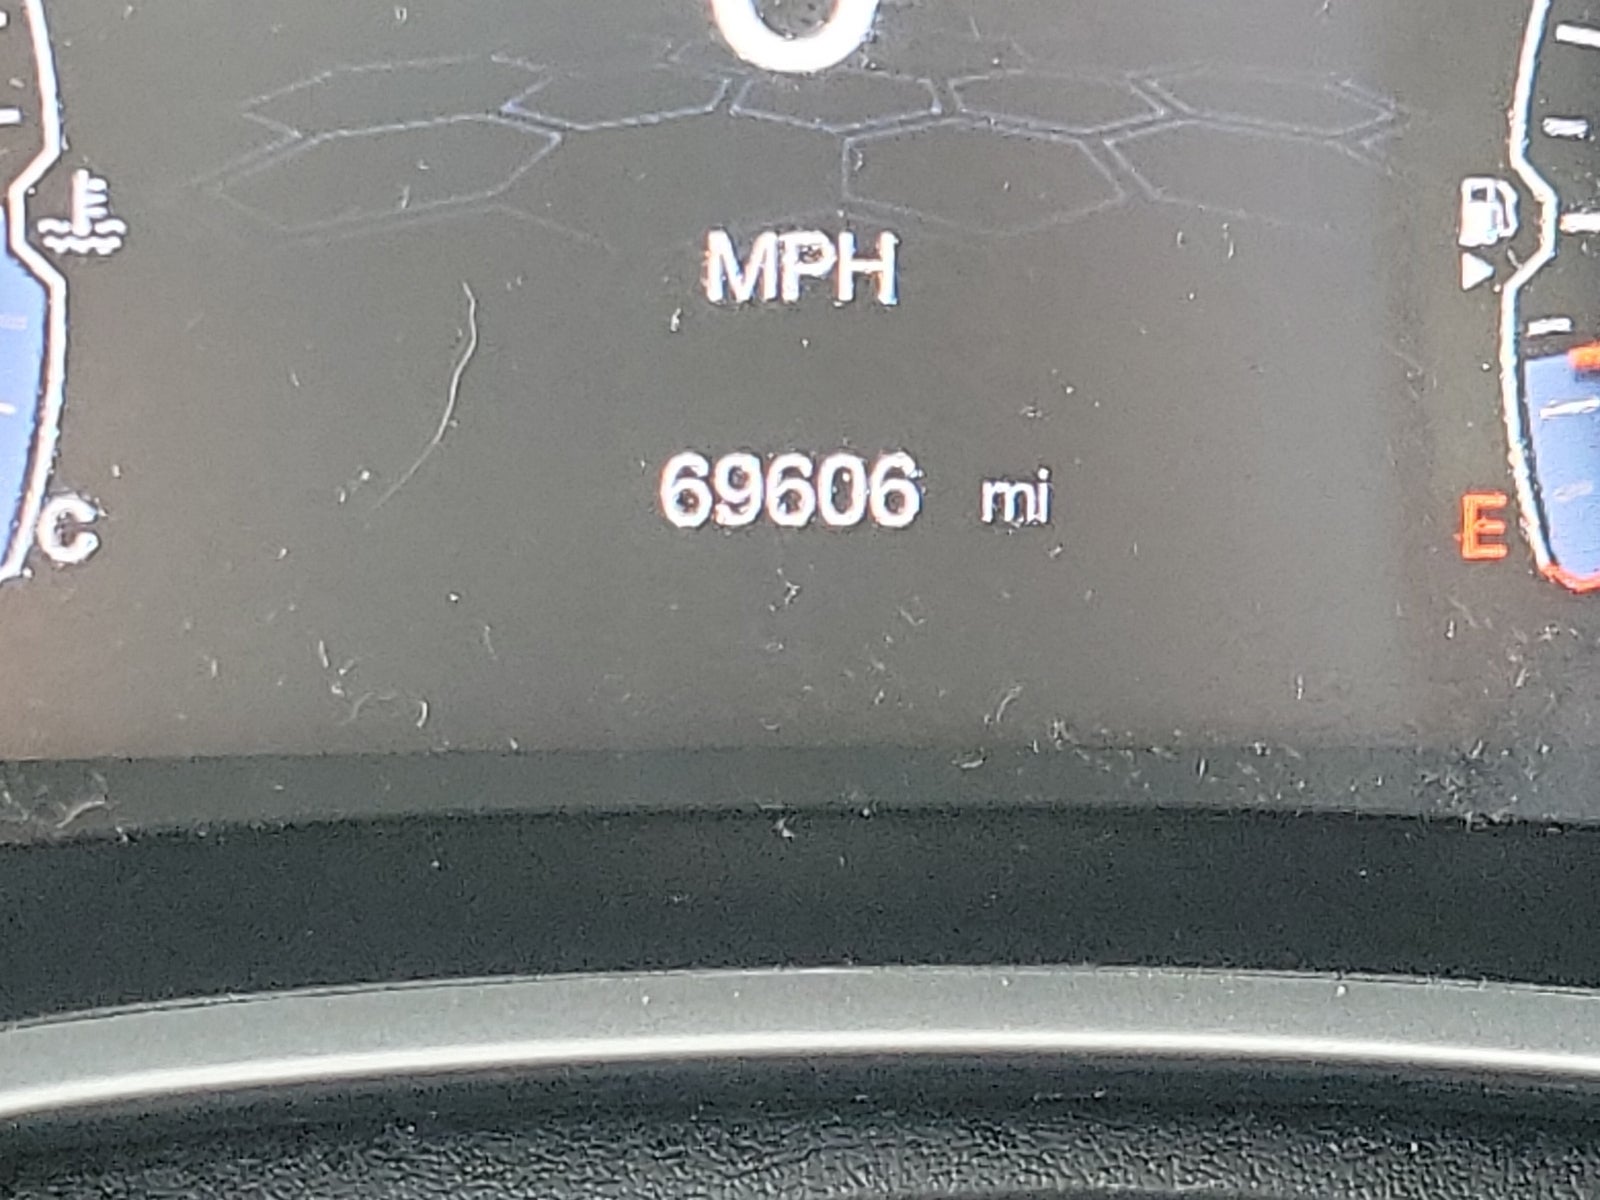 2018 Jeep Compass Altitude